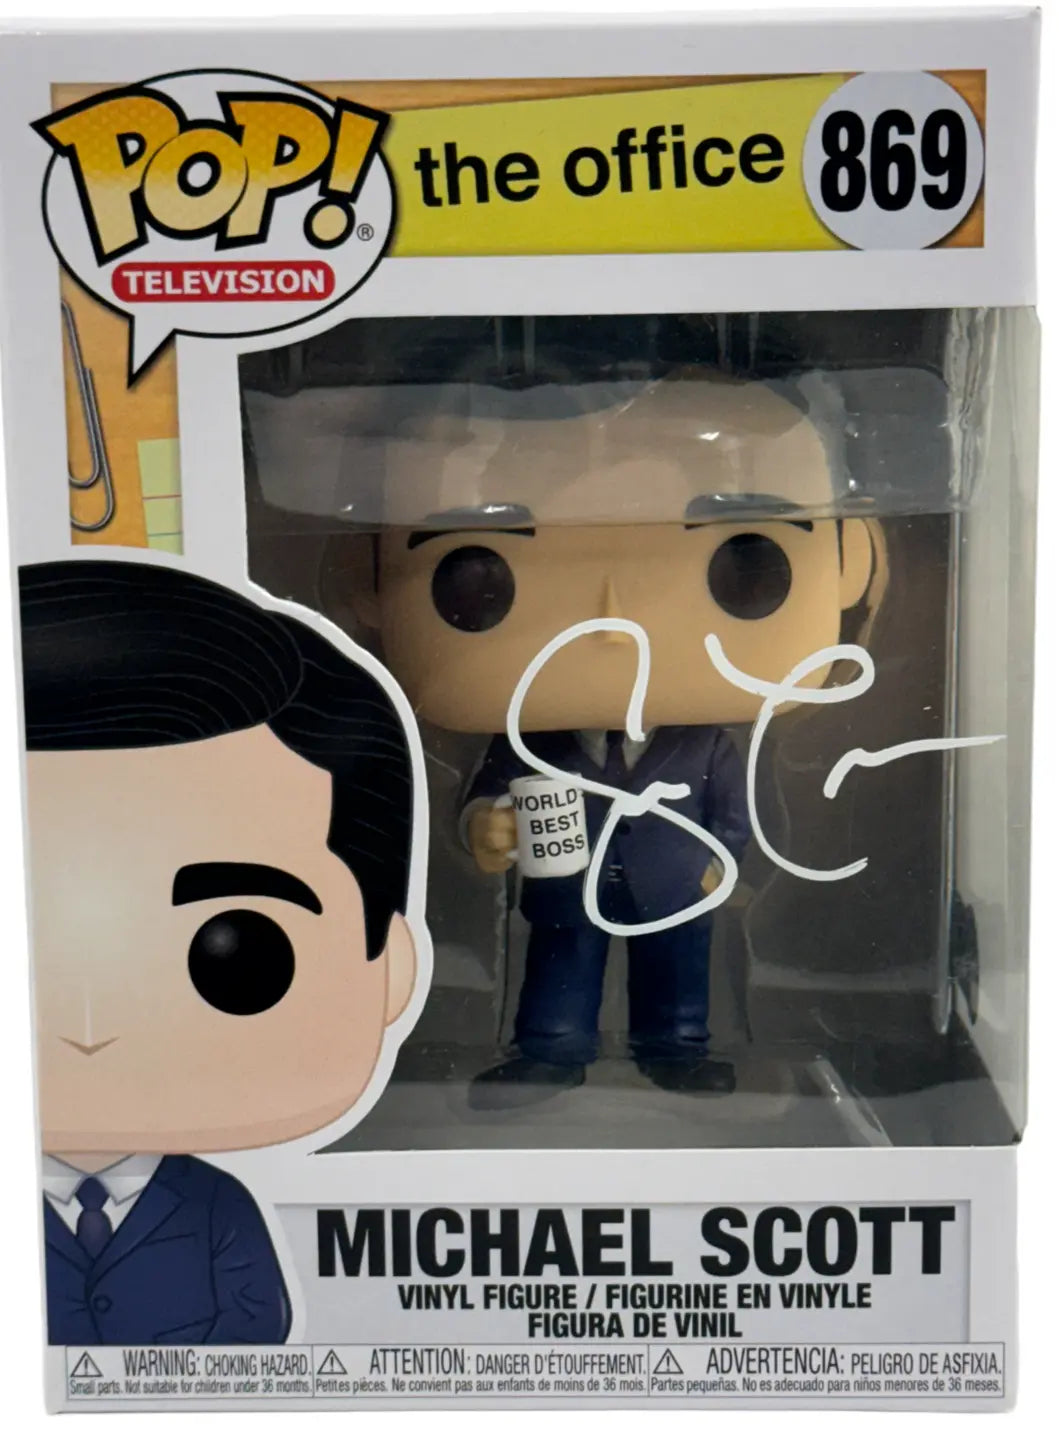 Steve Carell Authentic Autographed Michael Scott 869 The Office Funko Pop Figure